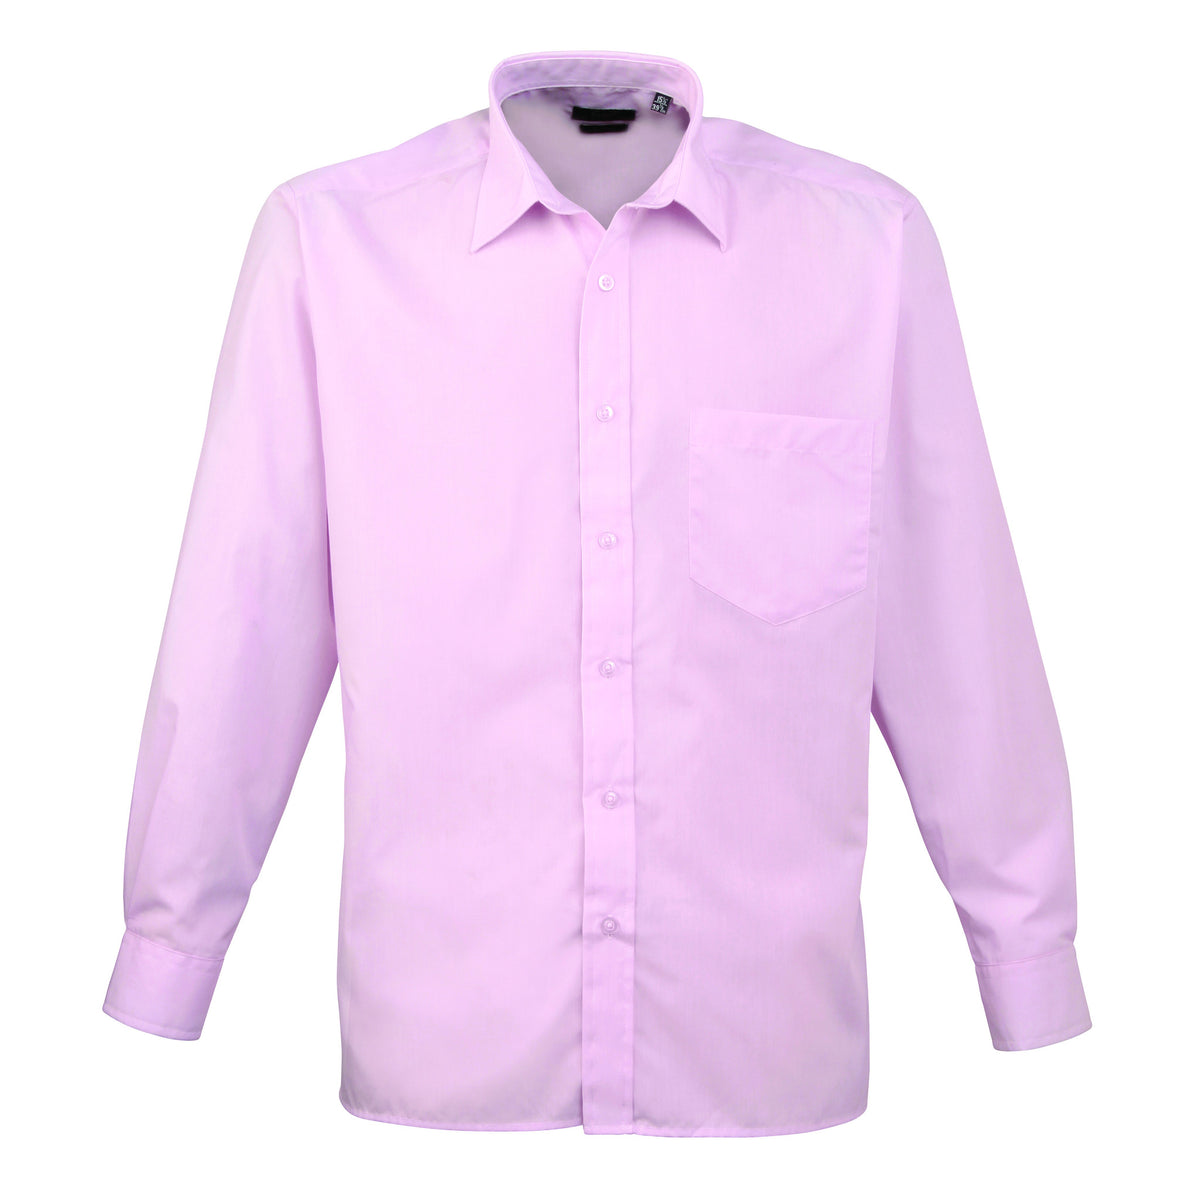 Premier Poplin Shirts (Hot Pink, Pink, Burgundy, Red, Strawberry) - peterdrew.com
 - 4